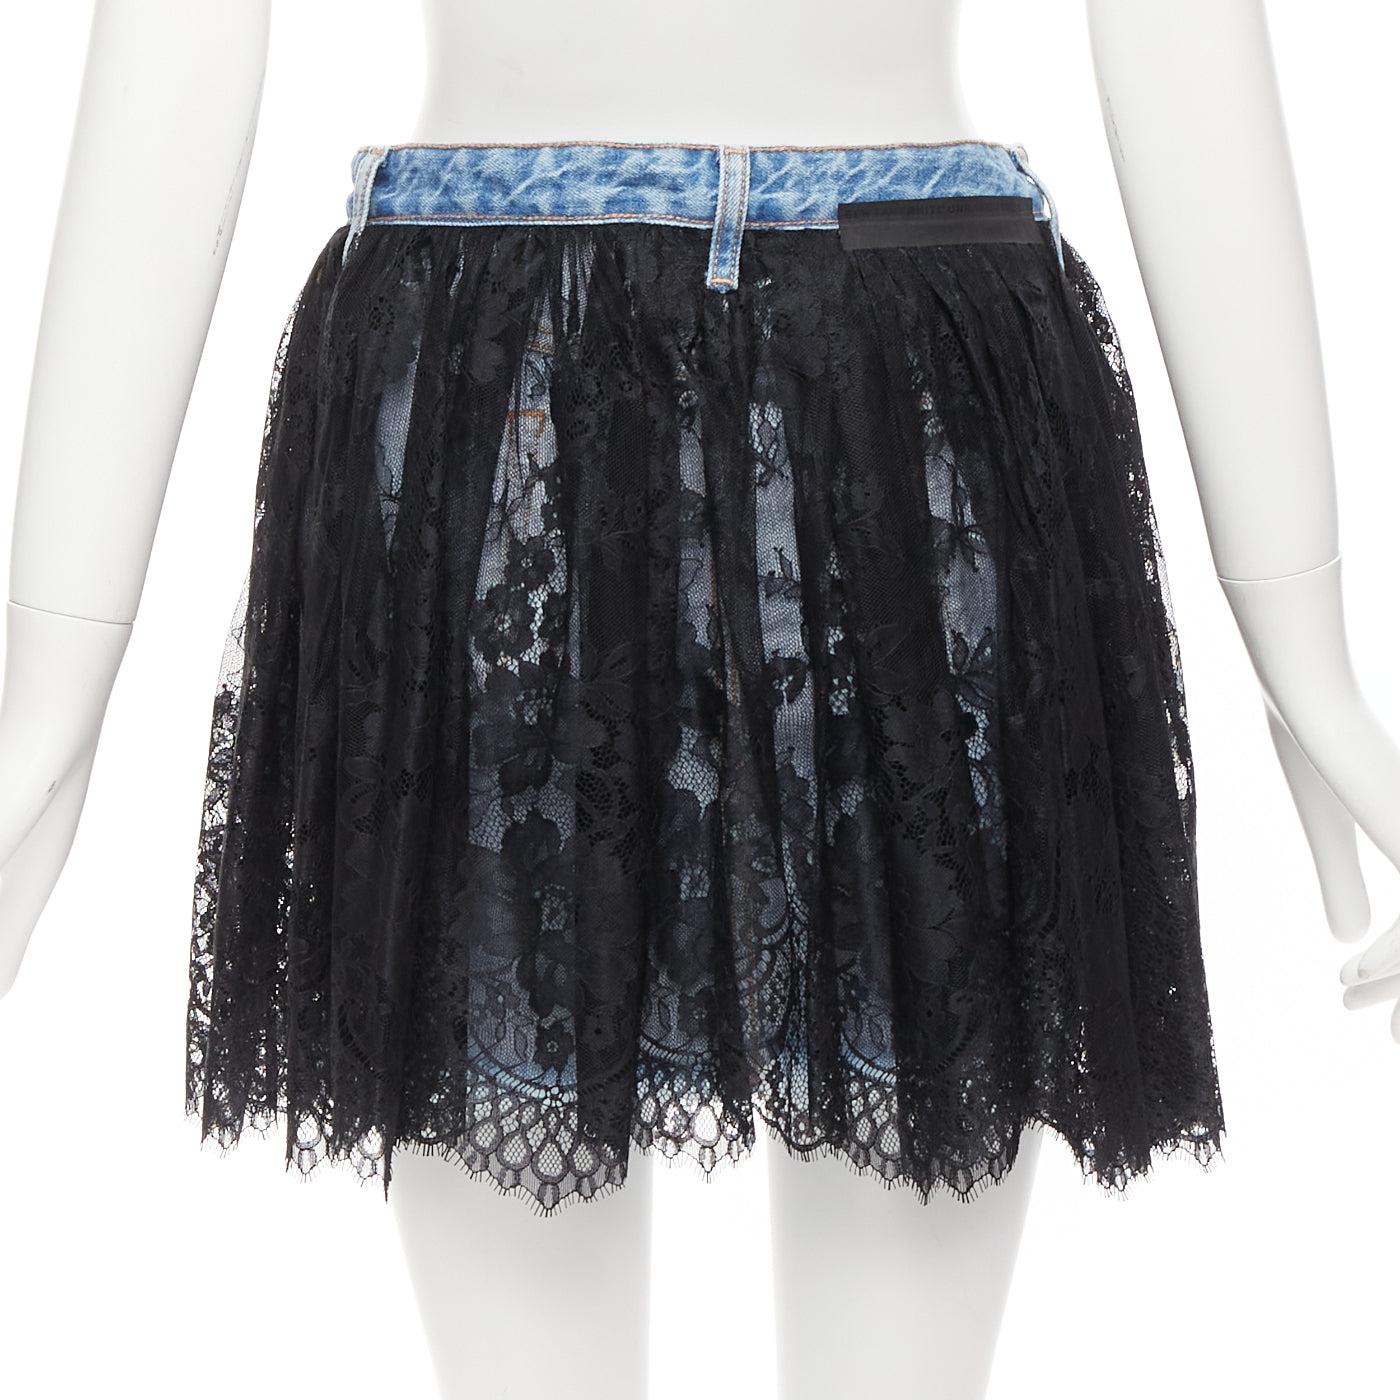 UNRAVEL PROJECT black floral lace ruffle blue denim inside out skirt 25